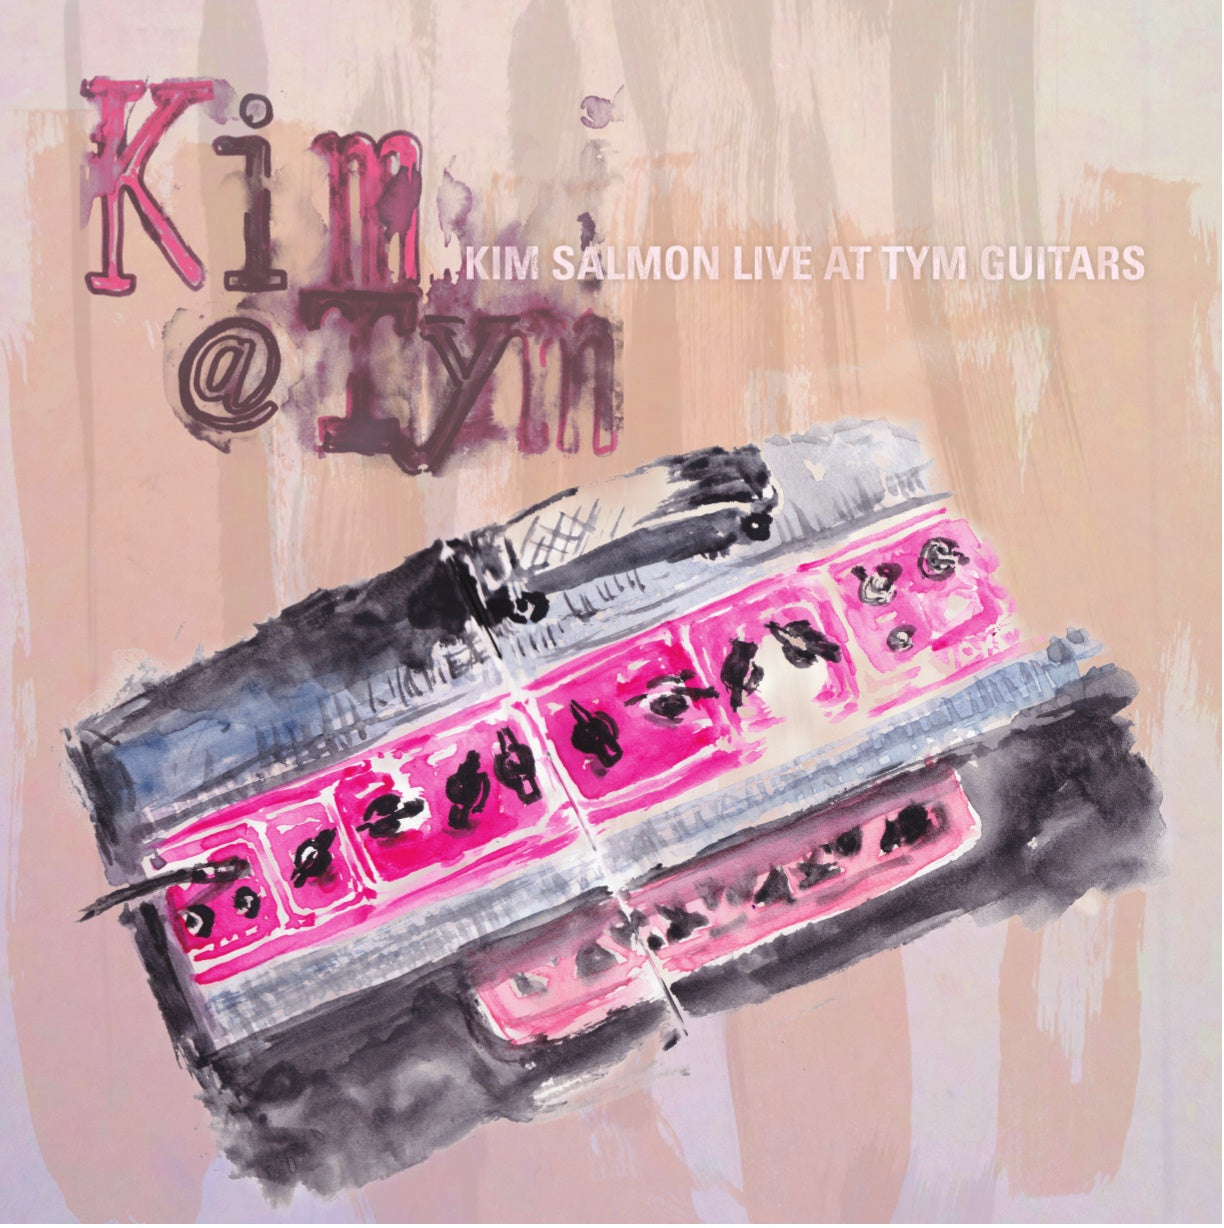 Tym records 051 Kim Salmon Live at Tym guitars 12 inch